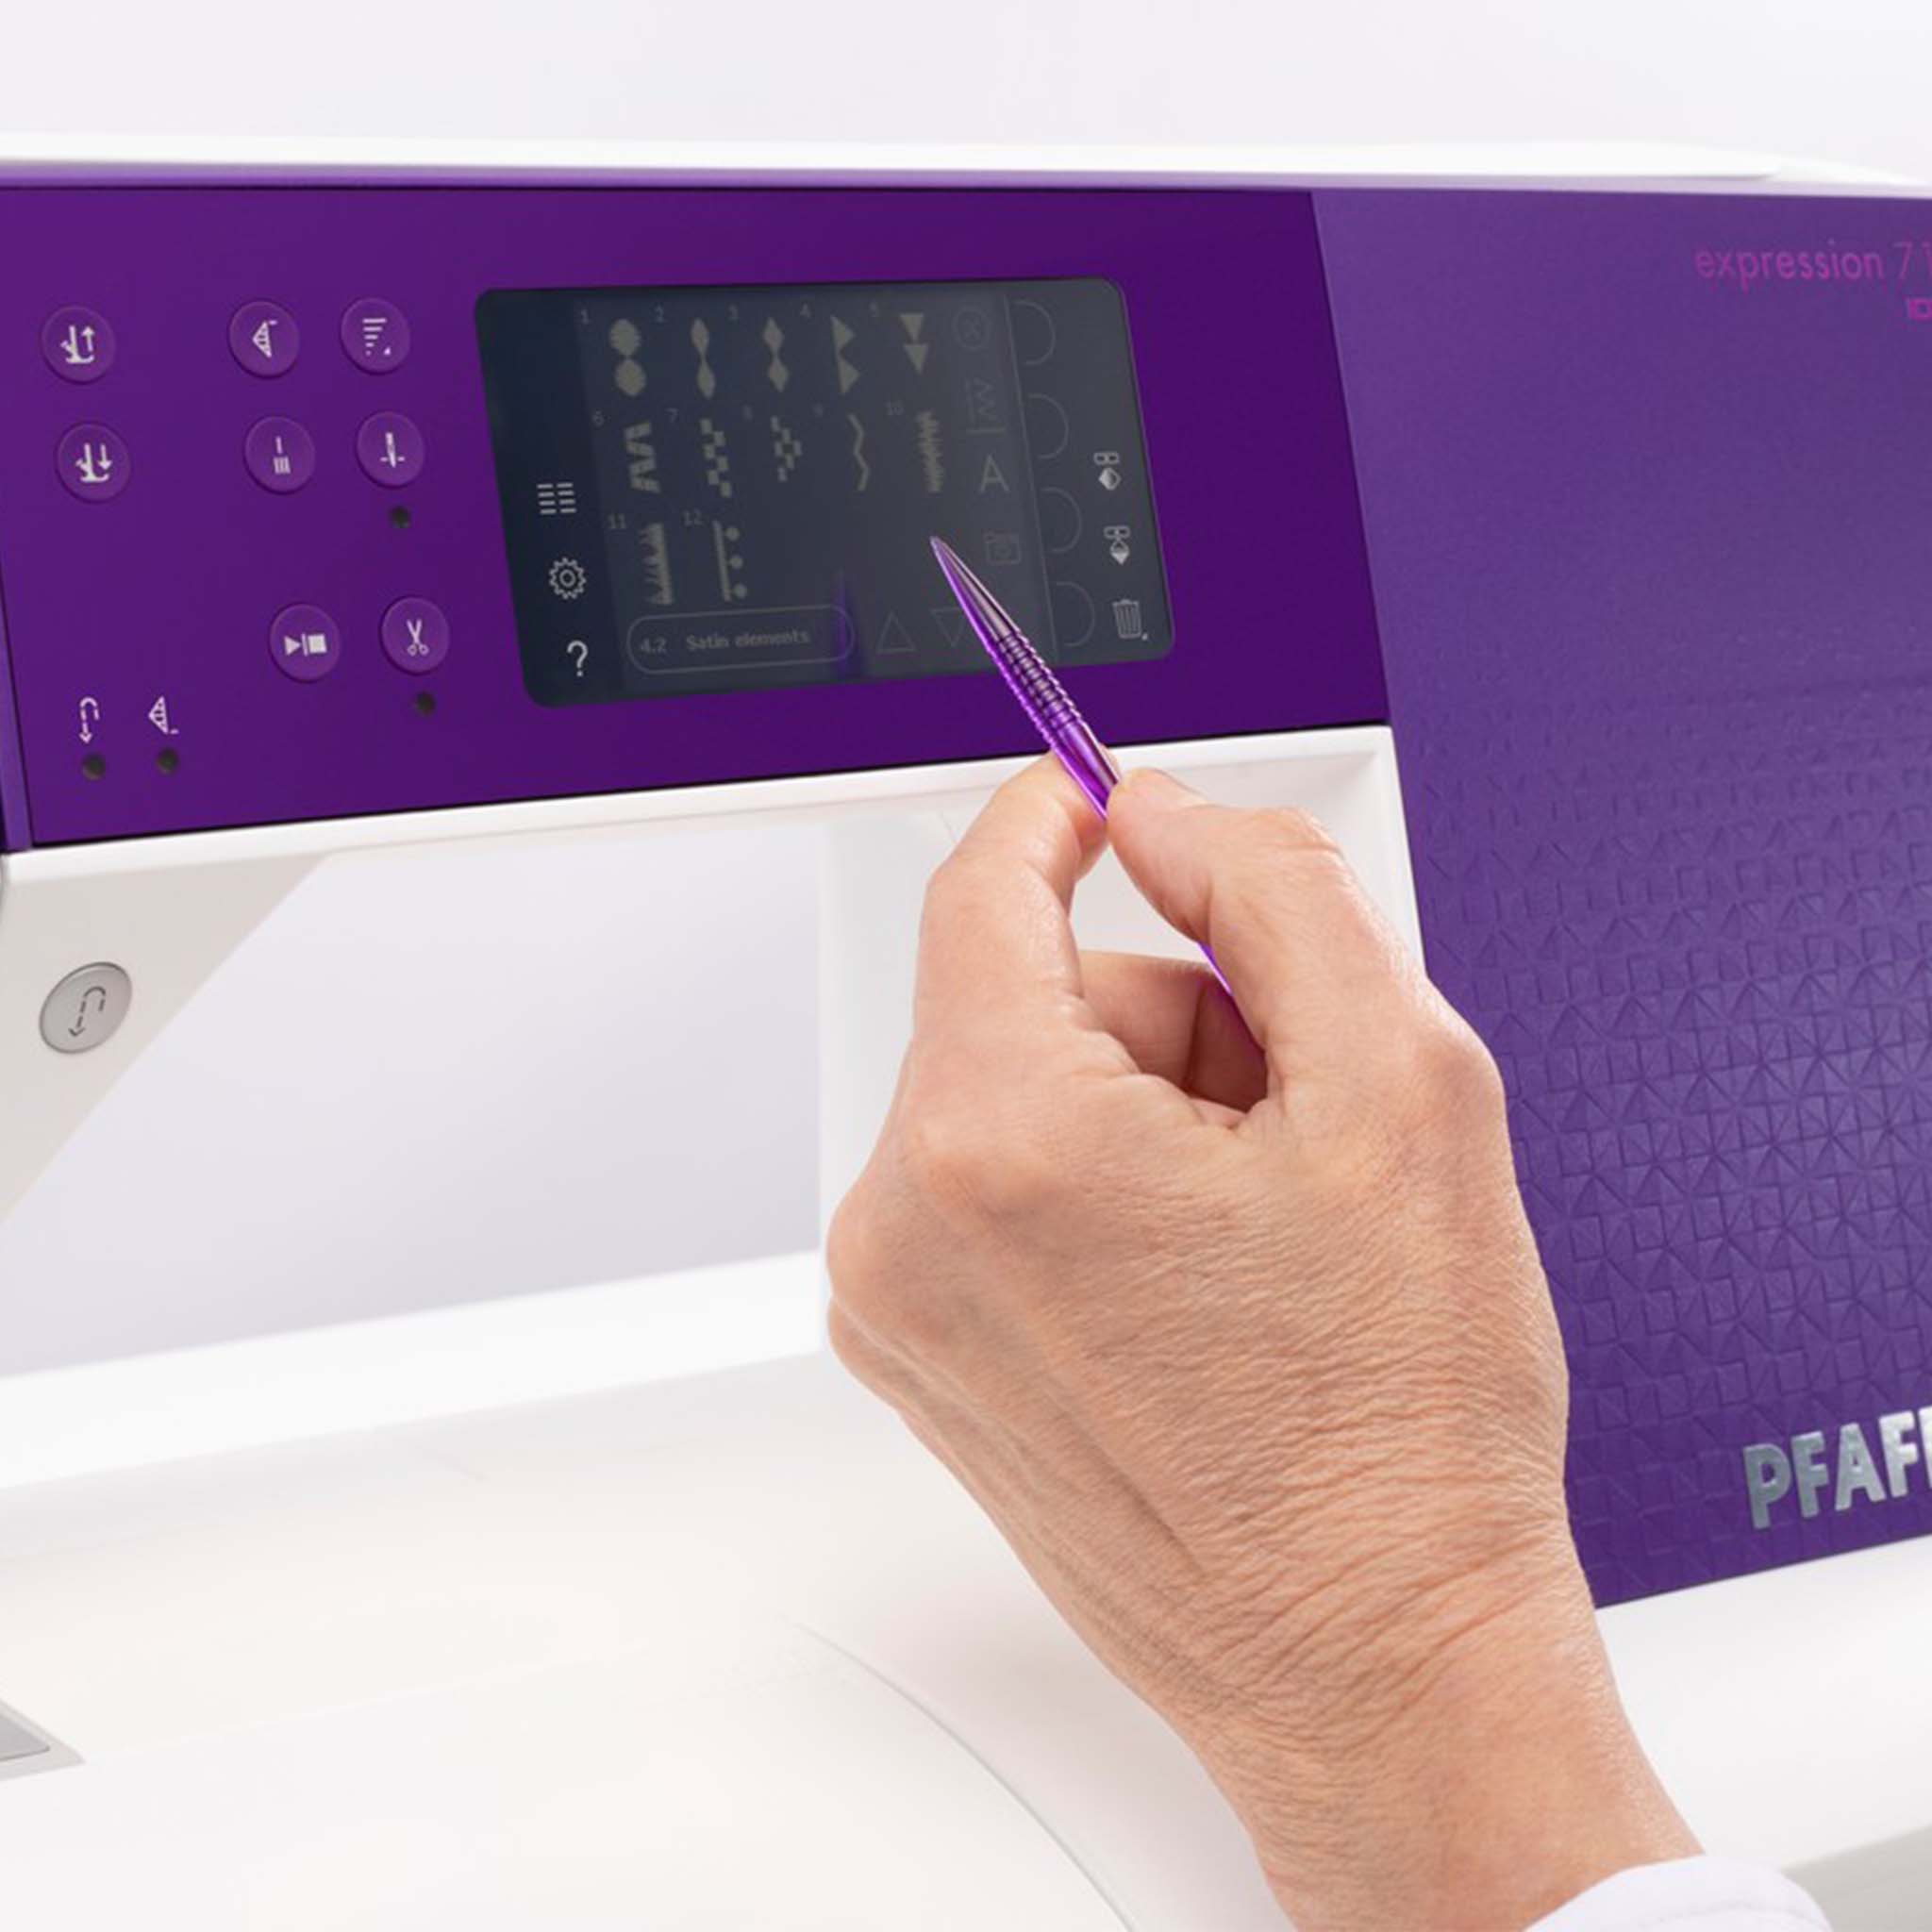 Pfaff Expression 710 Sewing & Quilting Machine